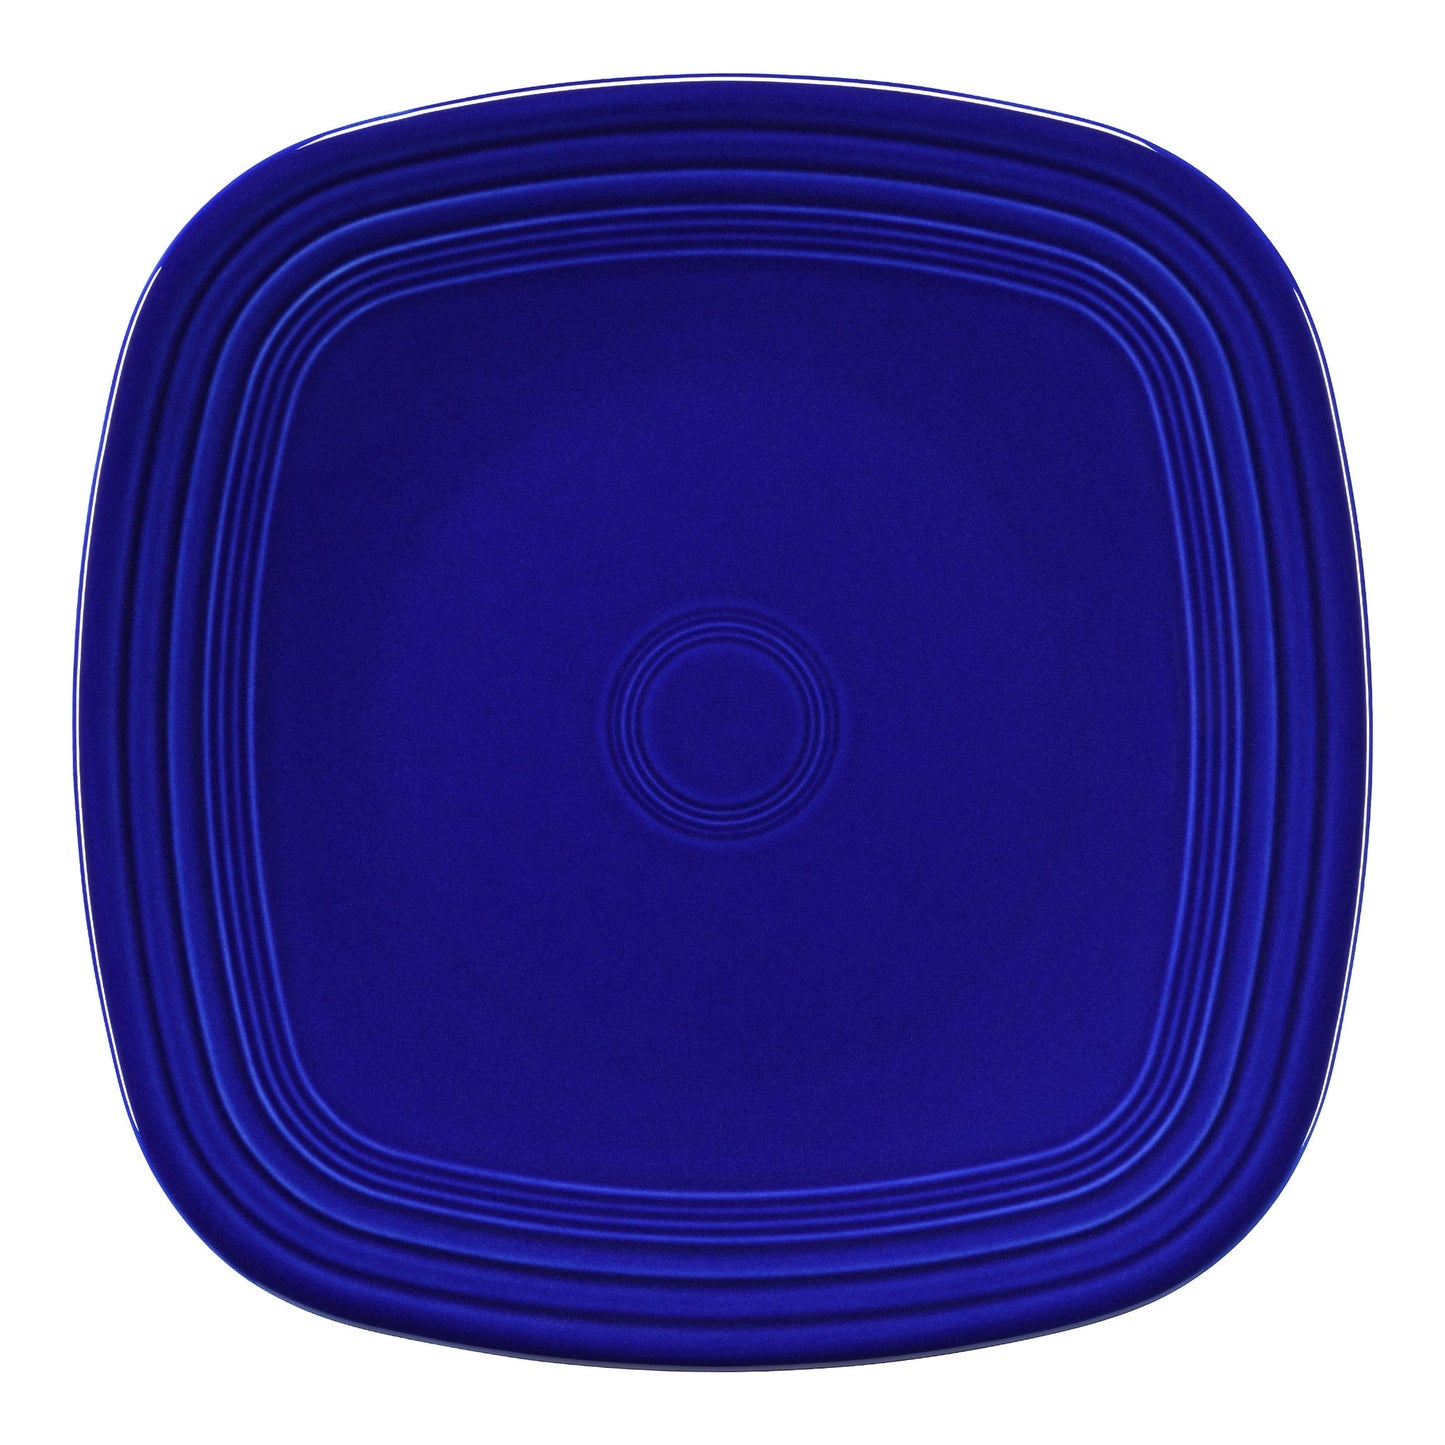 10 3/4" Square Dinner Plate